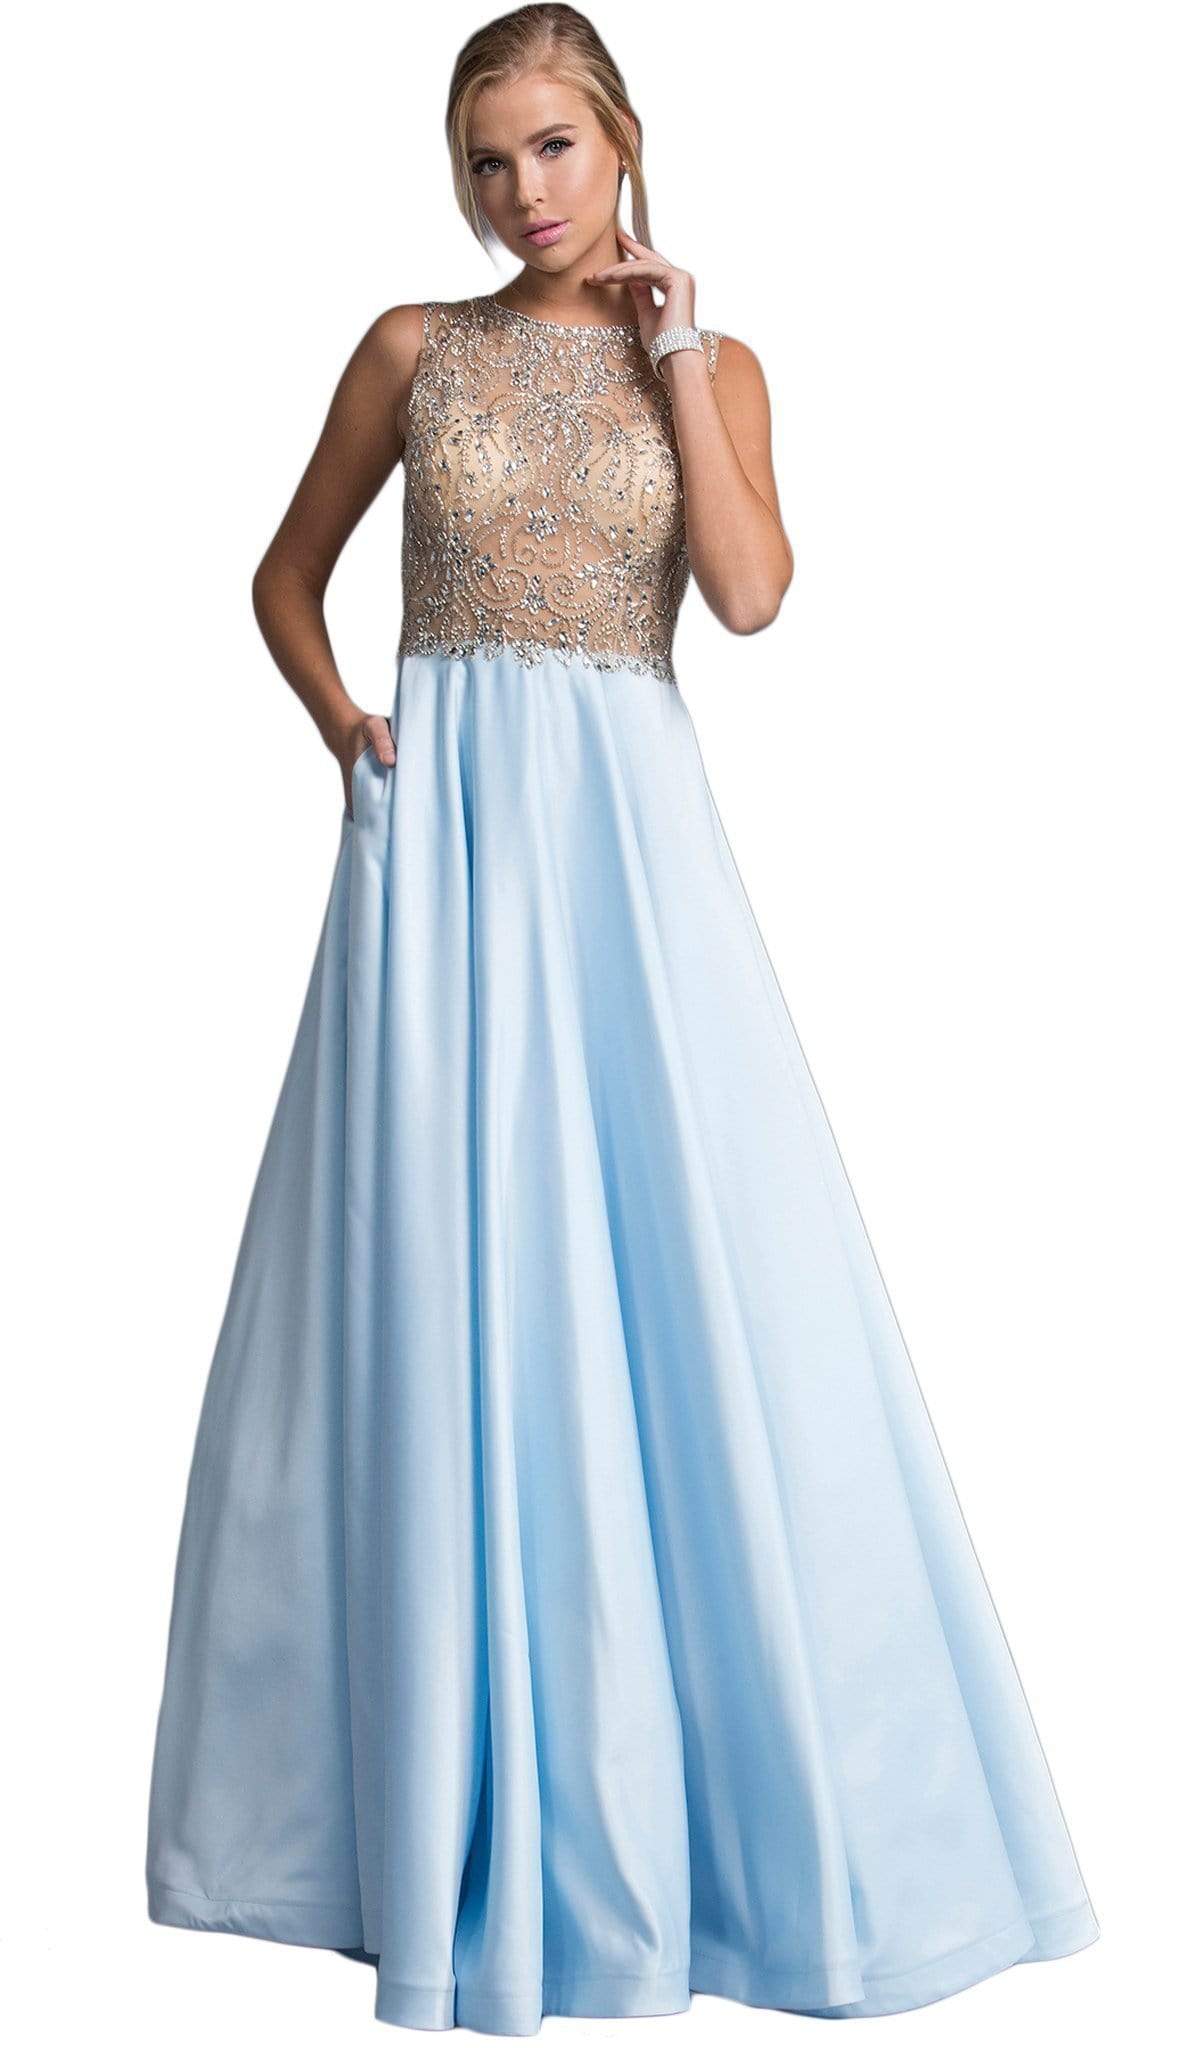 Aspeed Design - Bedazzled Illusion Jewel A-line Prom Dress
